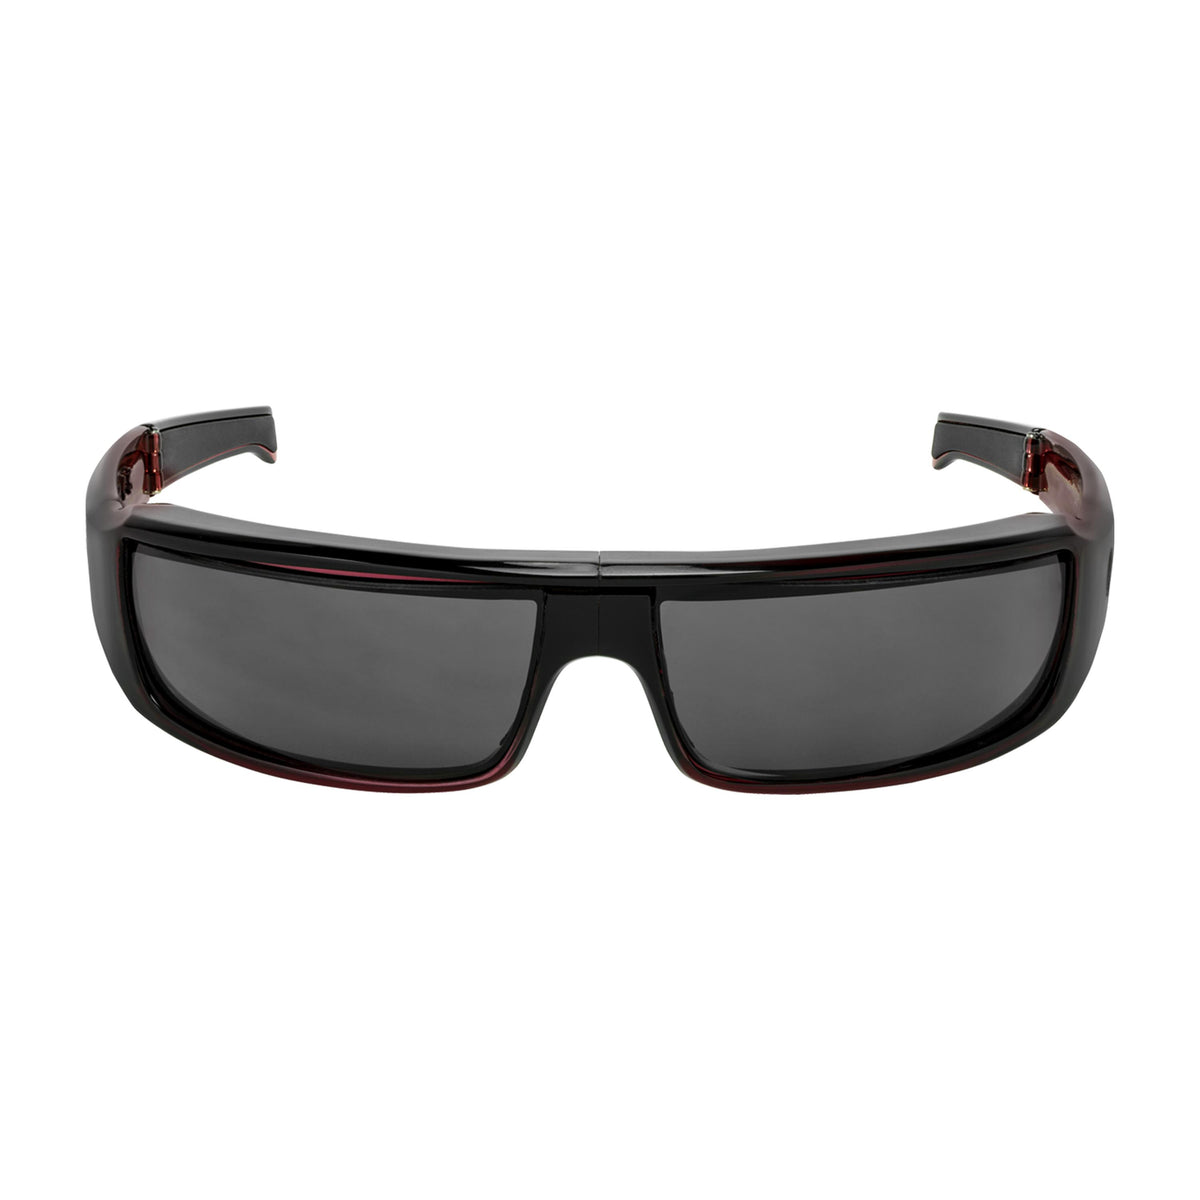 Popticals, Premium Compact Sunglasses, PopSign, 030020-LFGP, Polarized Sunglasses, Gloss Wine/Black Crystal Frame, Gray Lenses, Front View